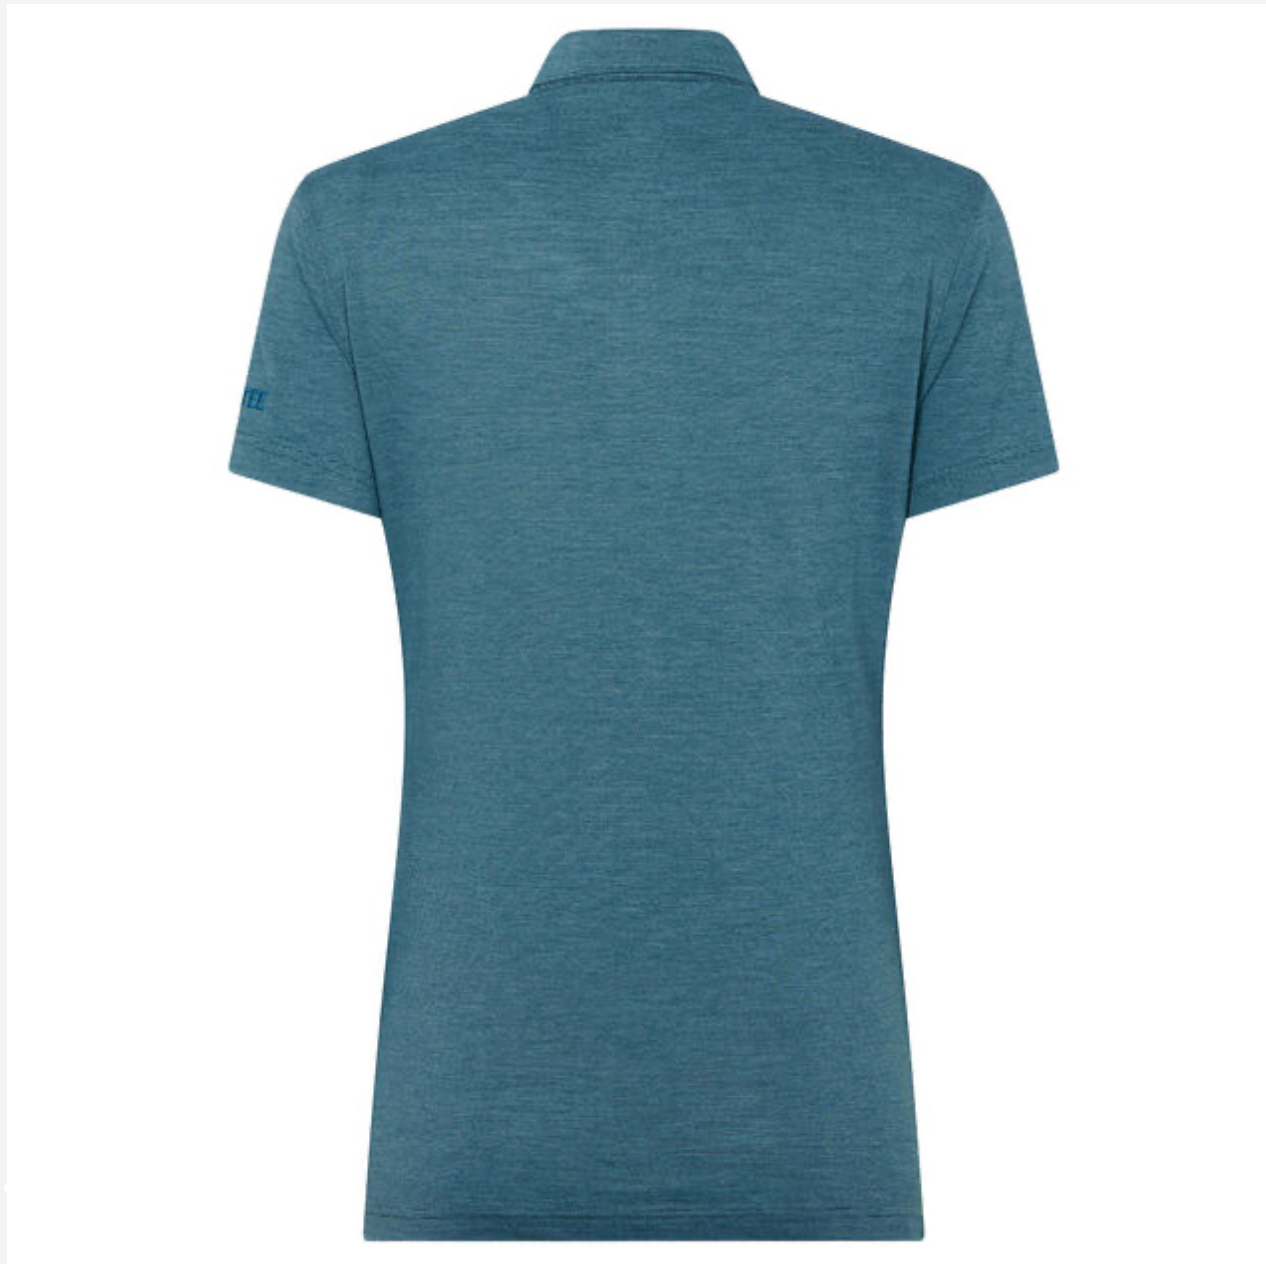 Oceantee Women's Polo Shirt - 5 Sizes Available